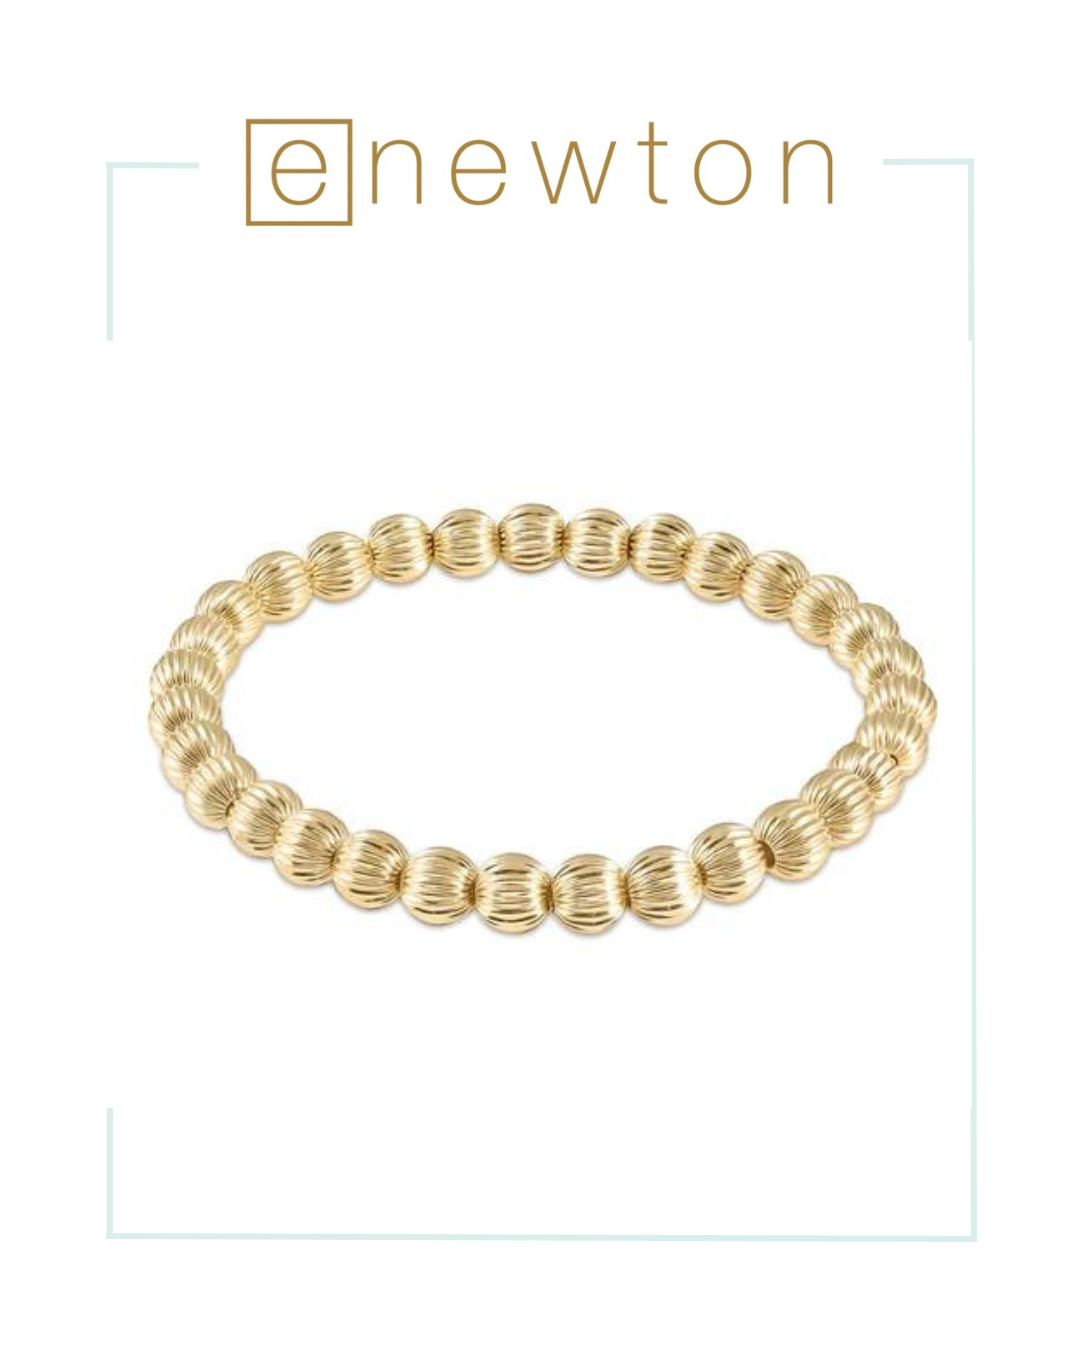 E Newton Dignity Gold 6mm Bead Bracelet-Bracelets-ENEWTON-The Village Shoppe, Women’s Fashion Boutique, Shop Online and In Store - Located in Muscle Shoals, AL.